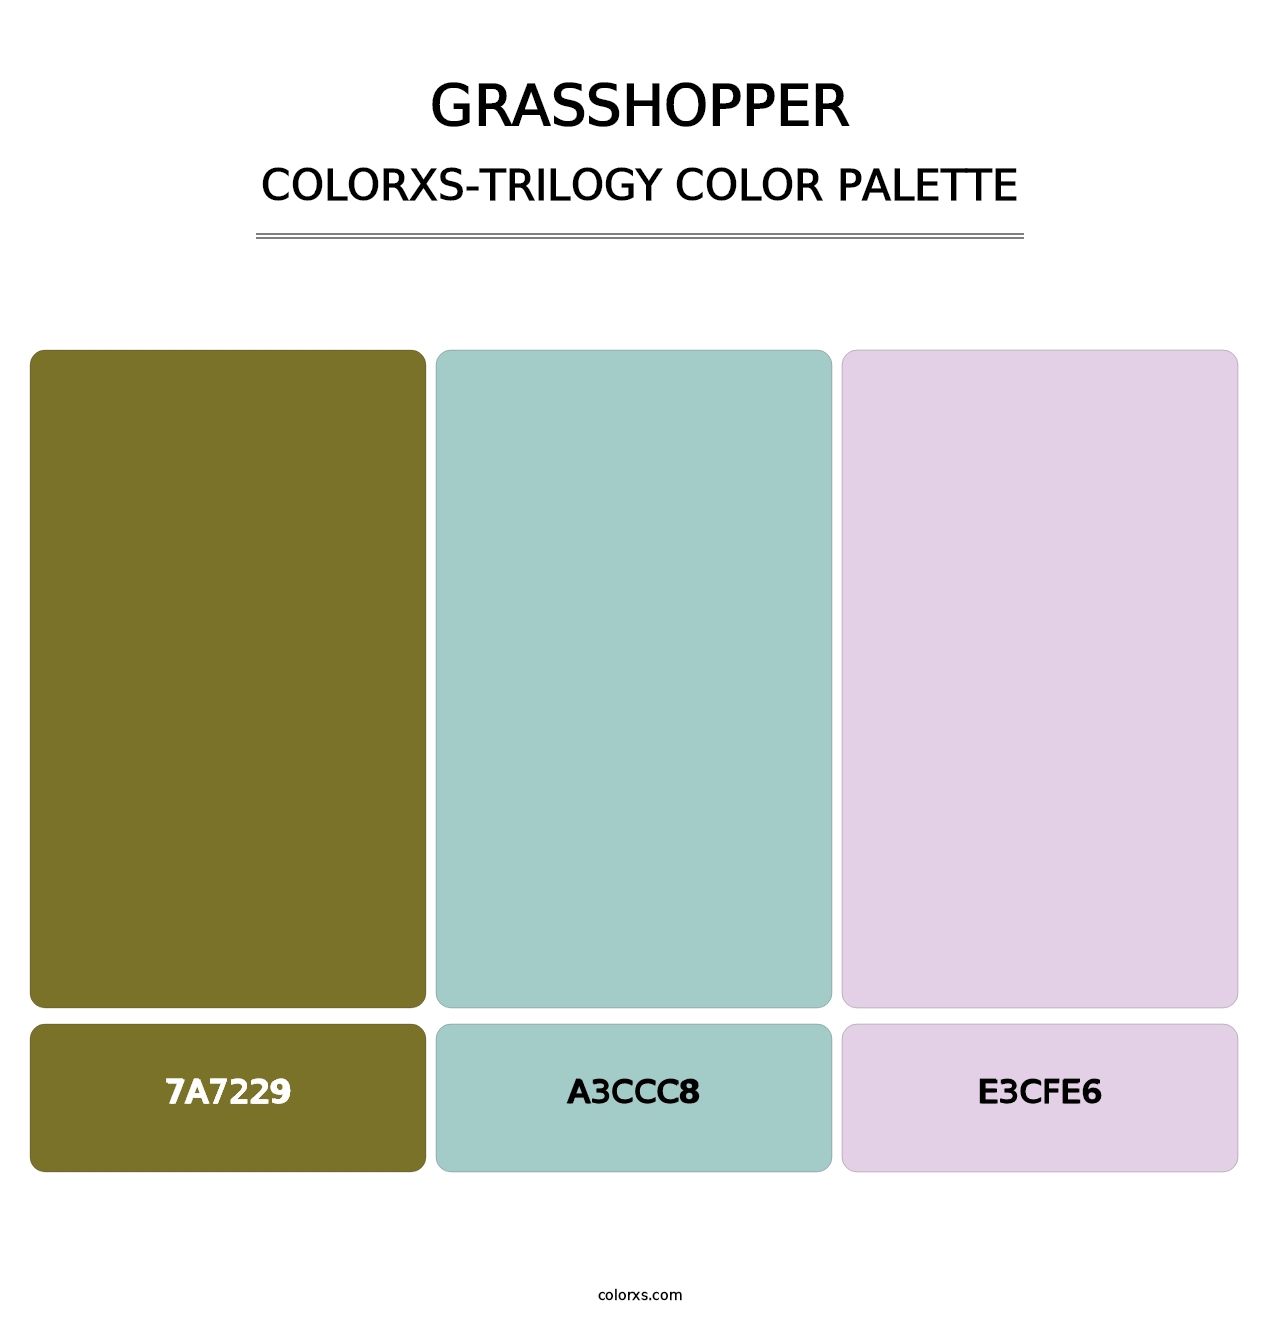 Grasshopper - Colorxs Trilogy Palette